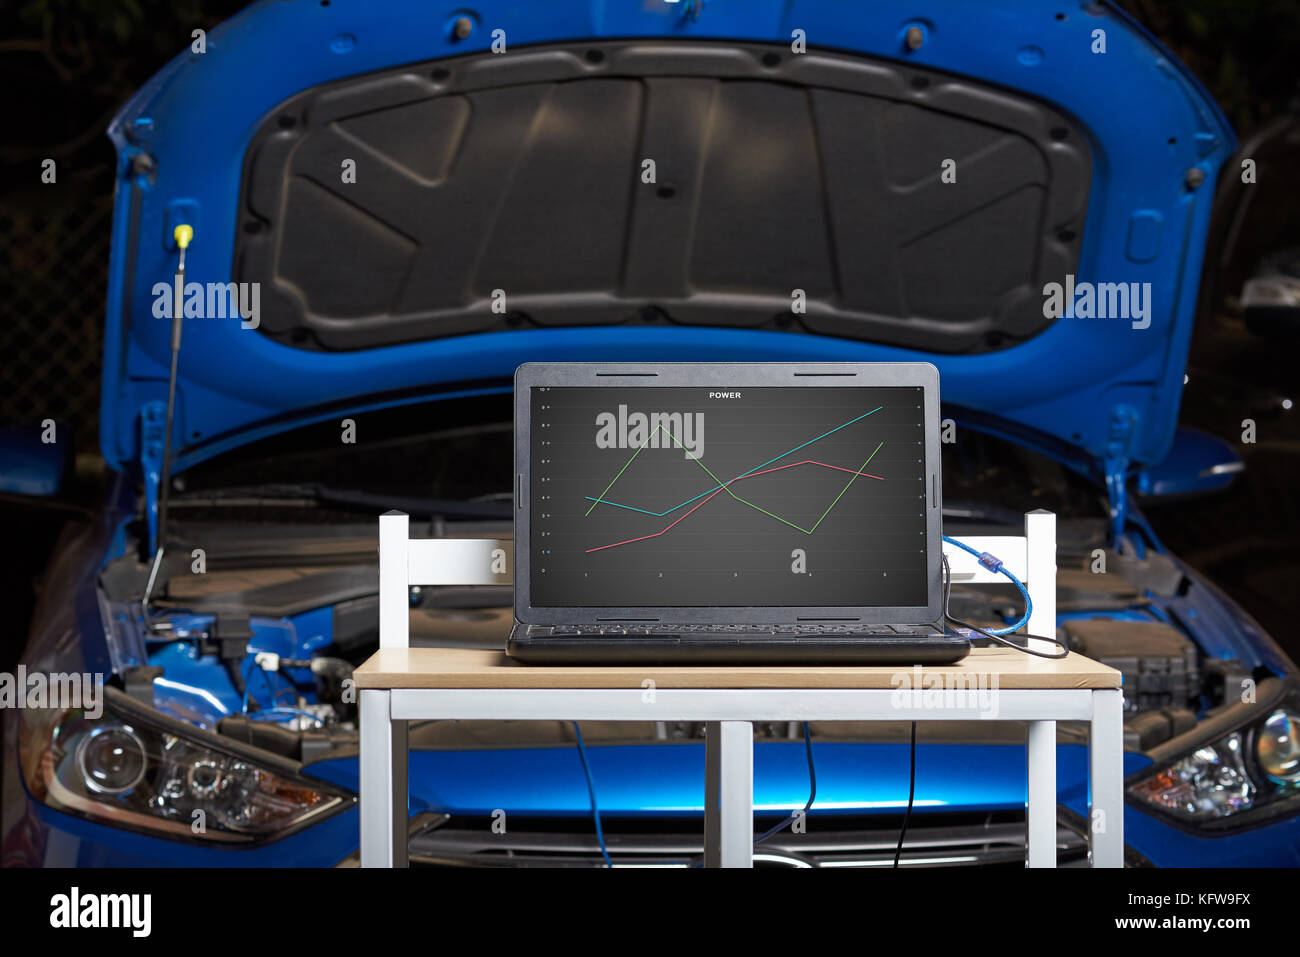 Car computer diagnostic concept. Table with laptop show car perfomance Stock Photo